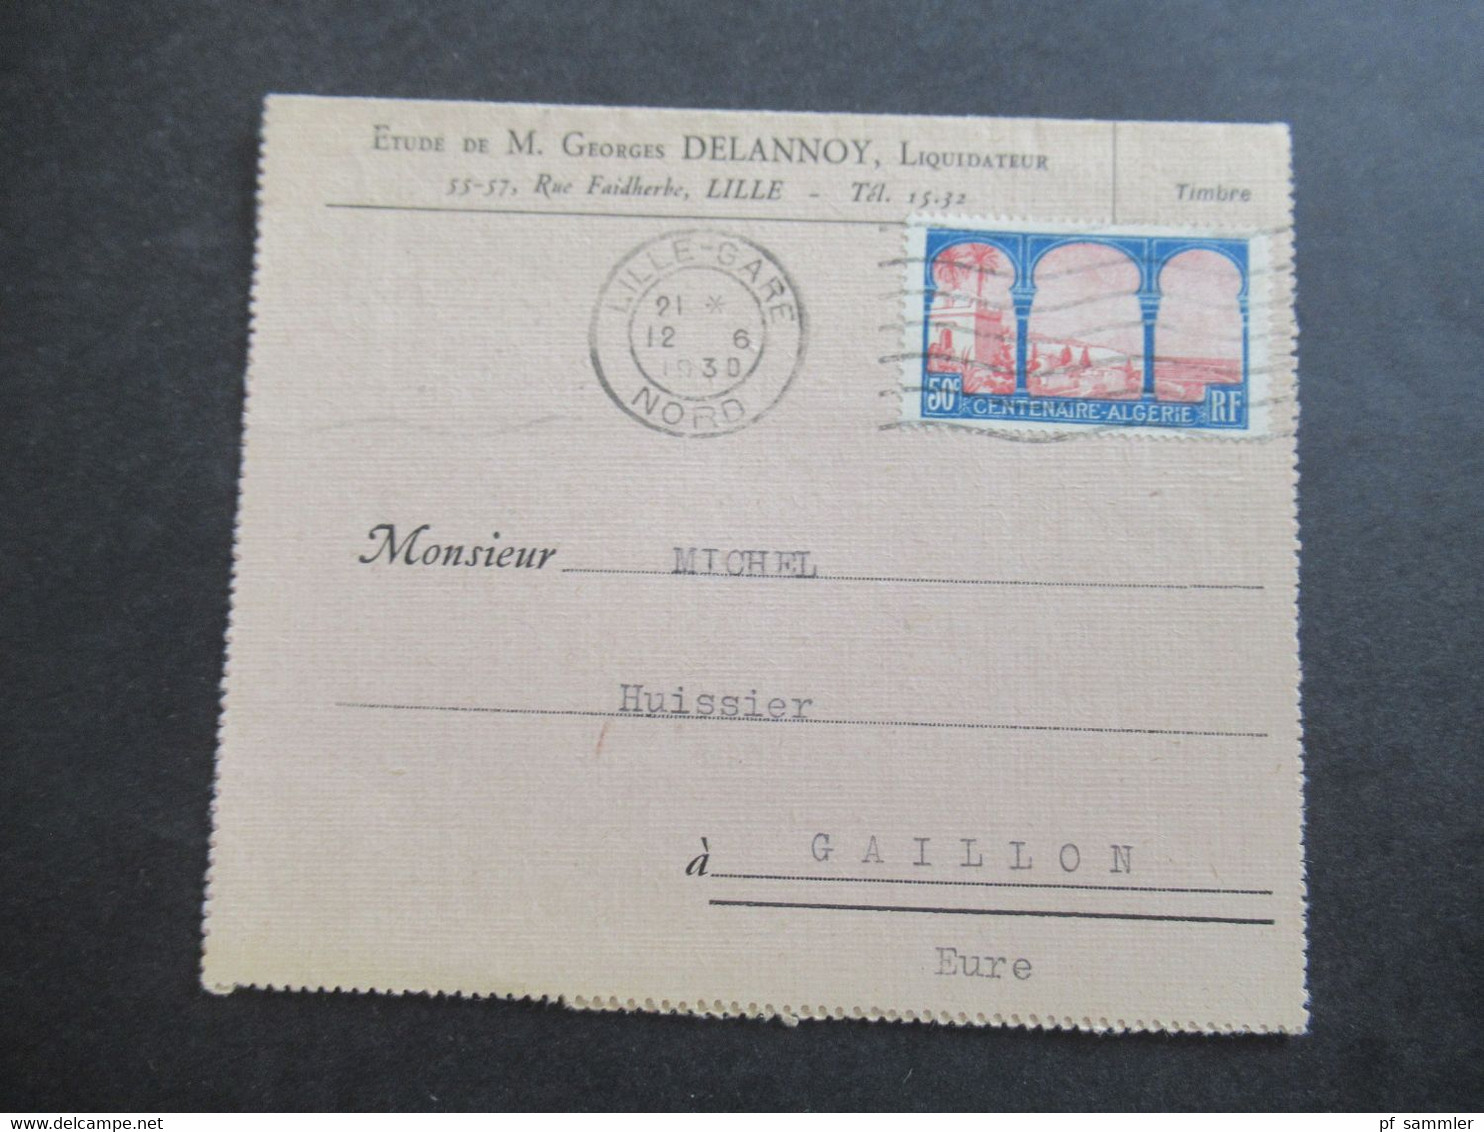 Frankreich 1930 Centeaire Algerie Kartenbrief Etude De M. Geotges Delannoy, Liquidateur Lille Nach Gaillon Gesendet - Lettres & Documents